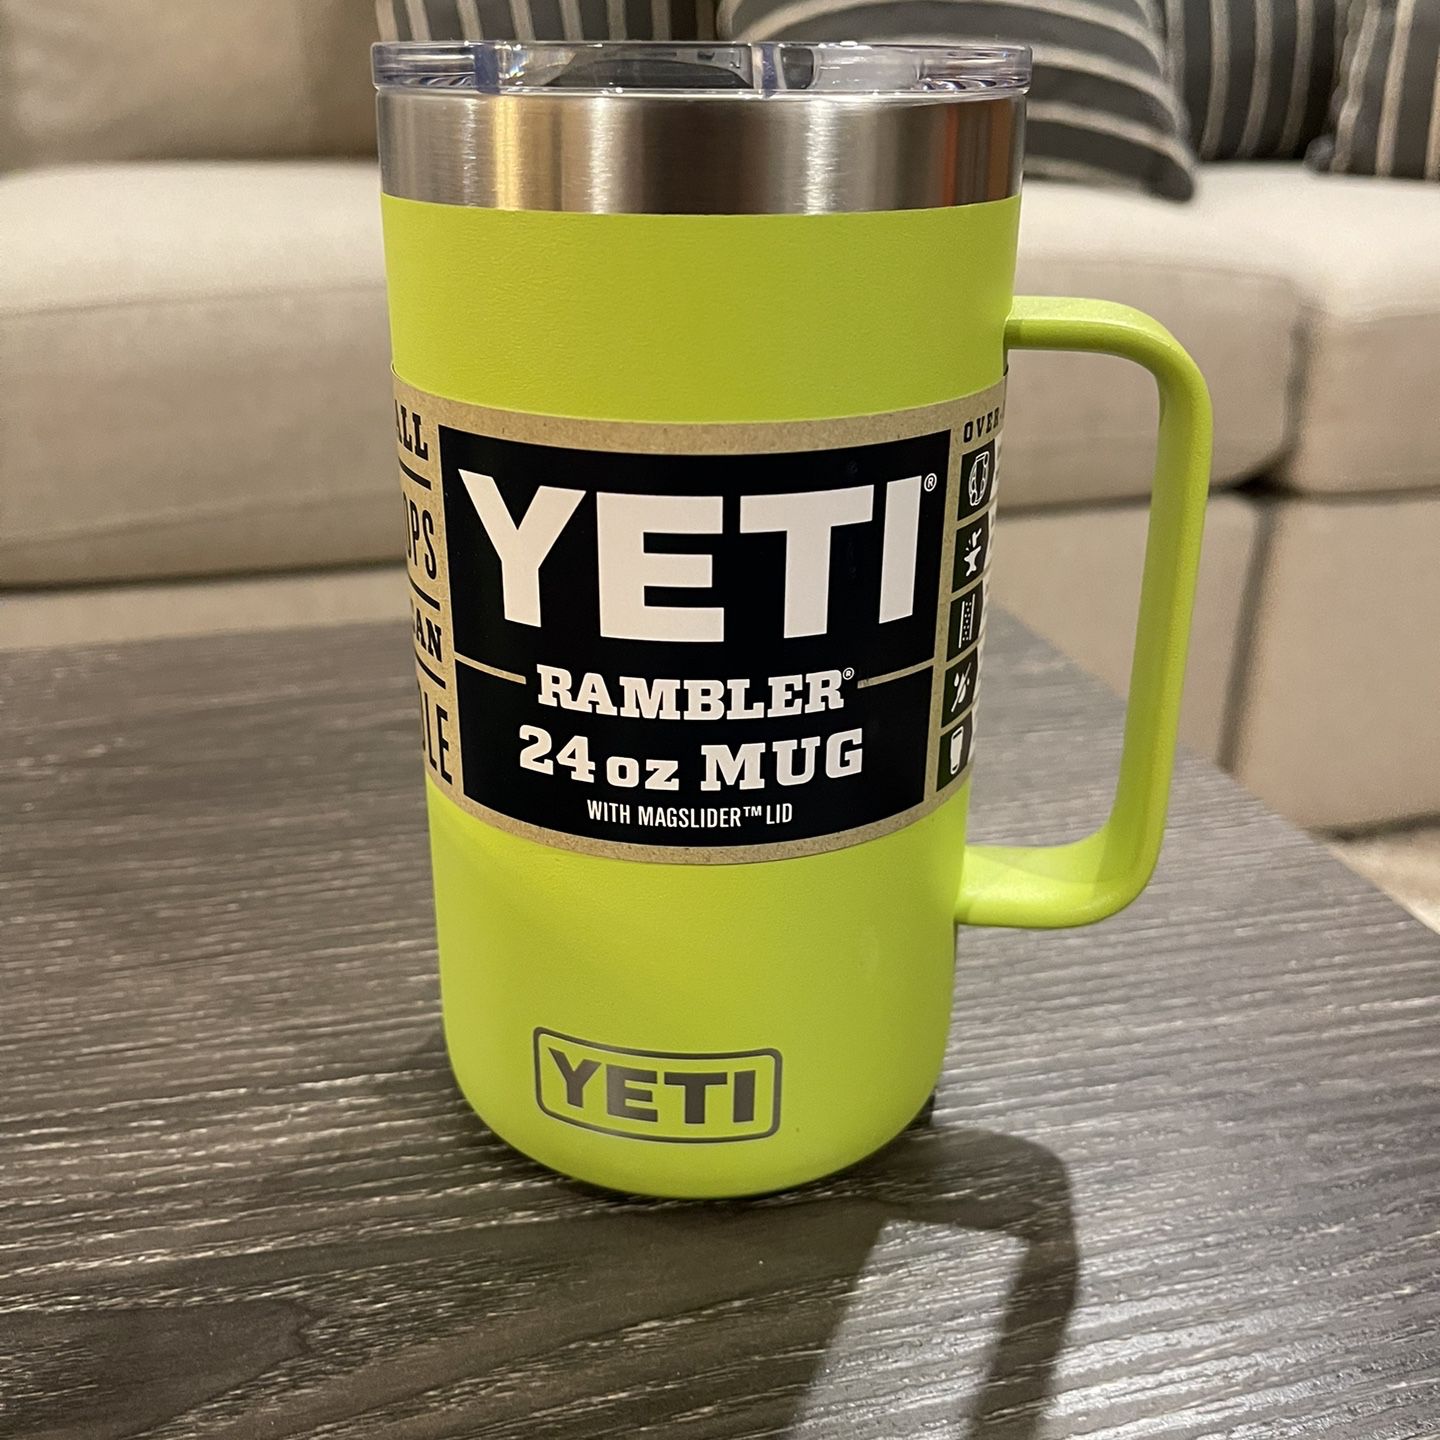 Yeti 24oz Mug for Sale in Alsip, IL - OfferUp